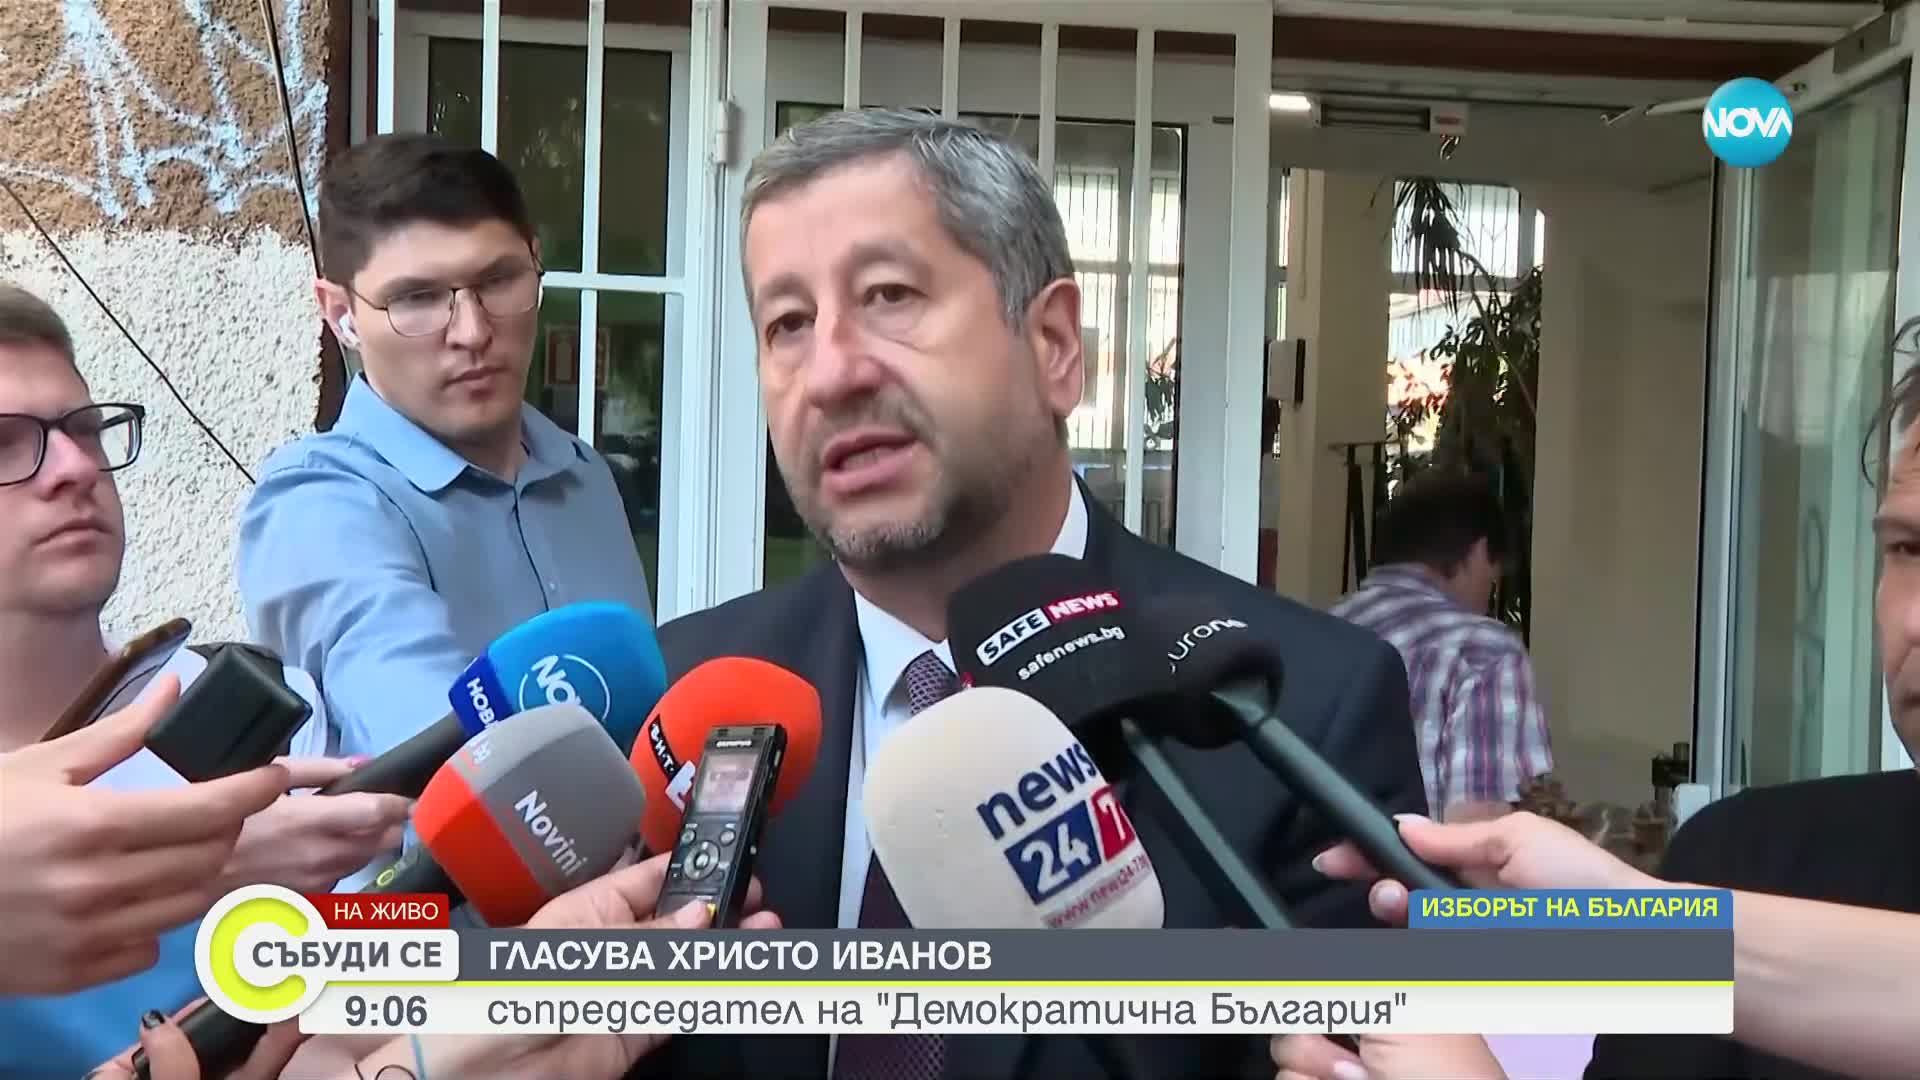 Христо Иванов: Гласувах да има мнозинство за нормална европейска България